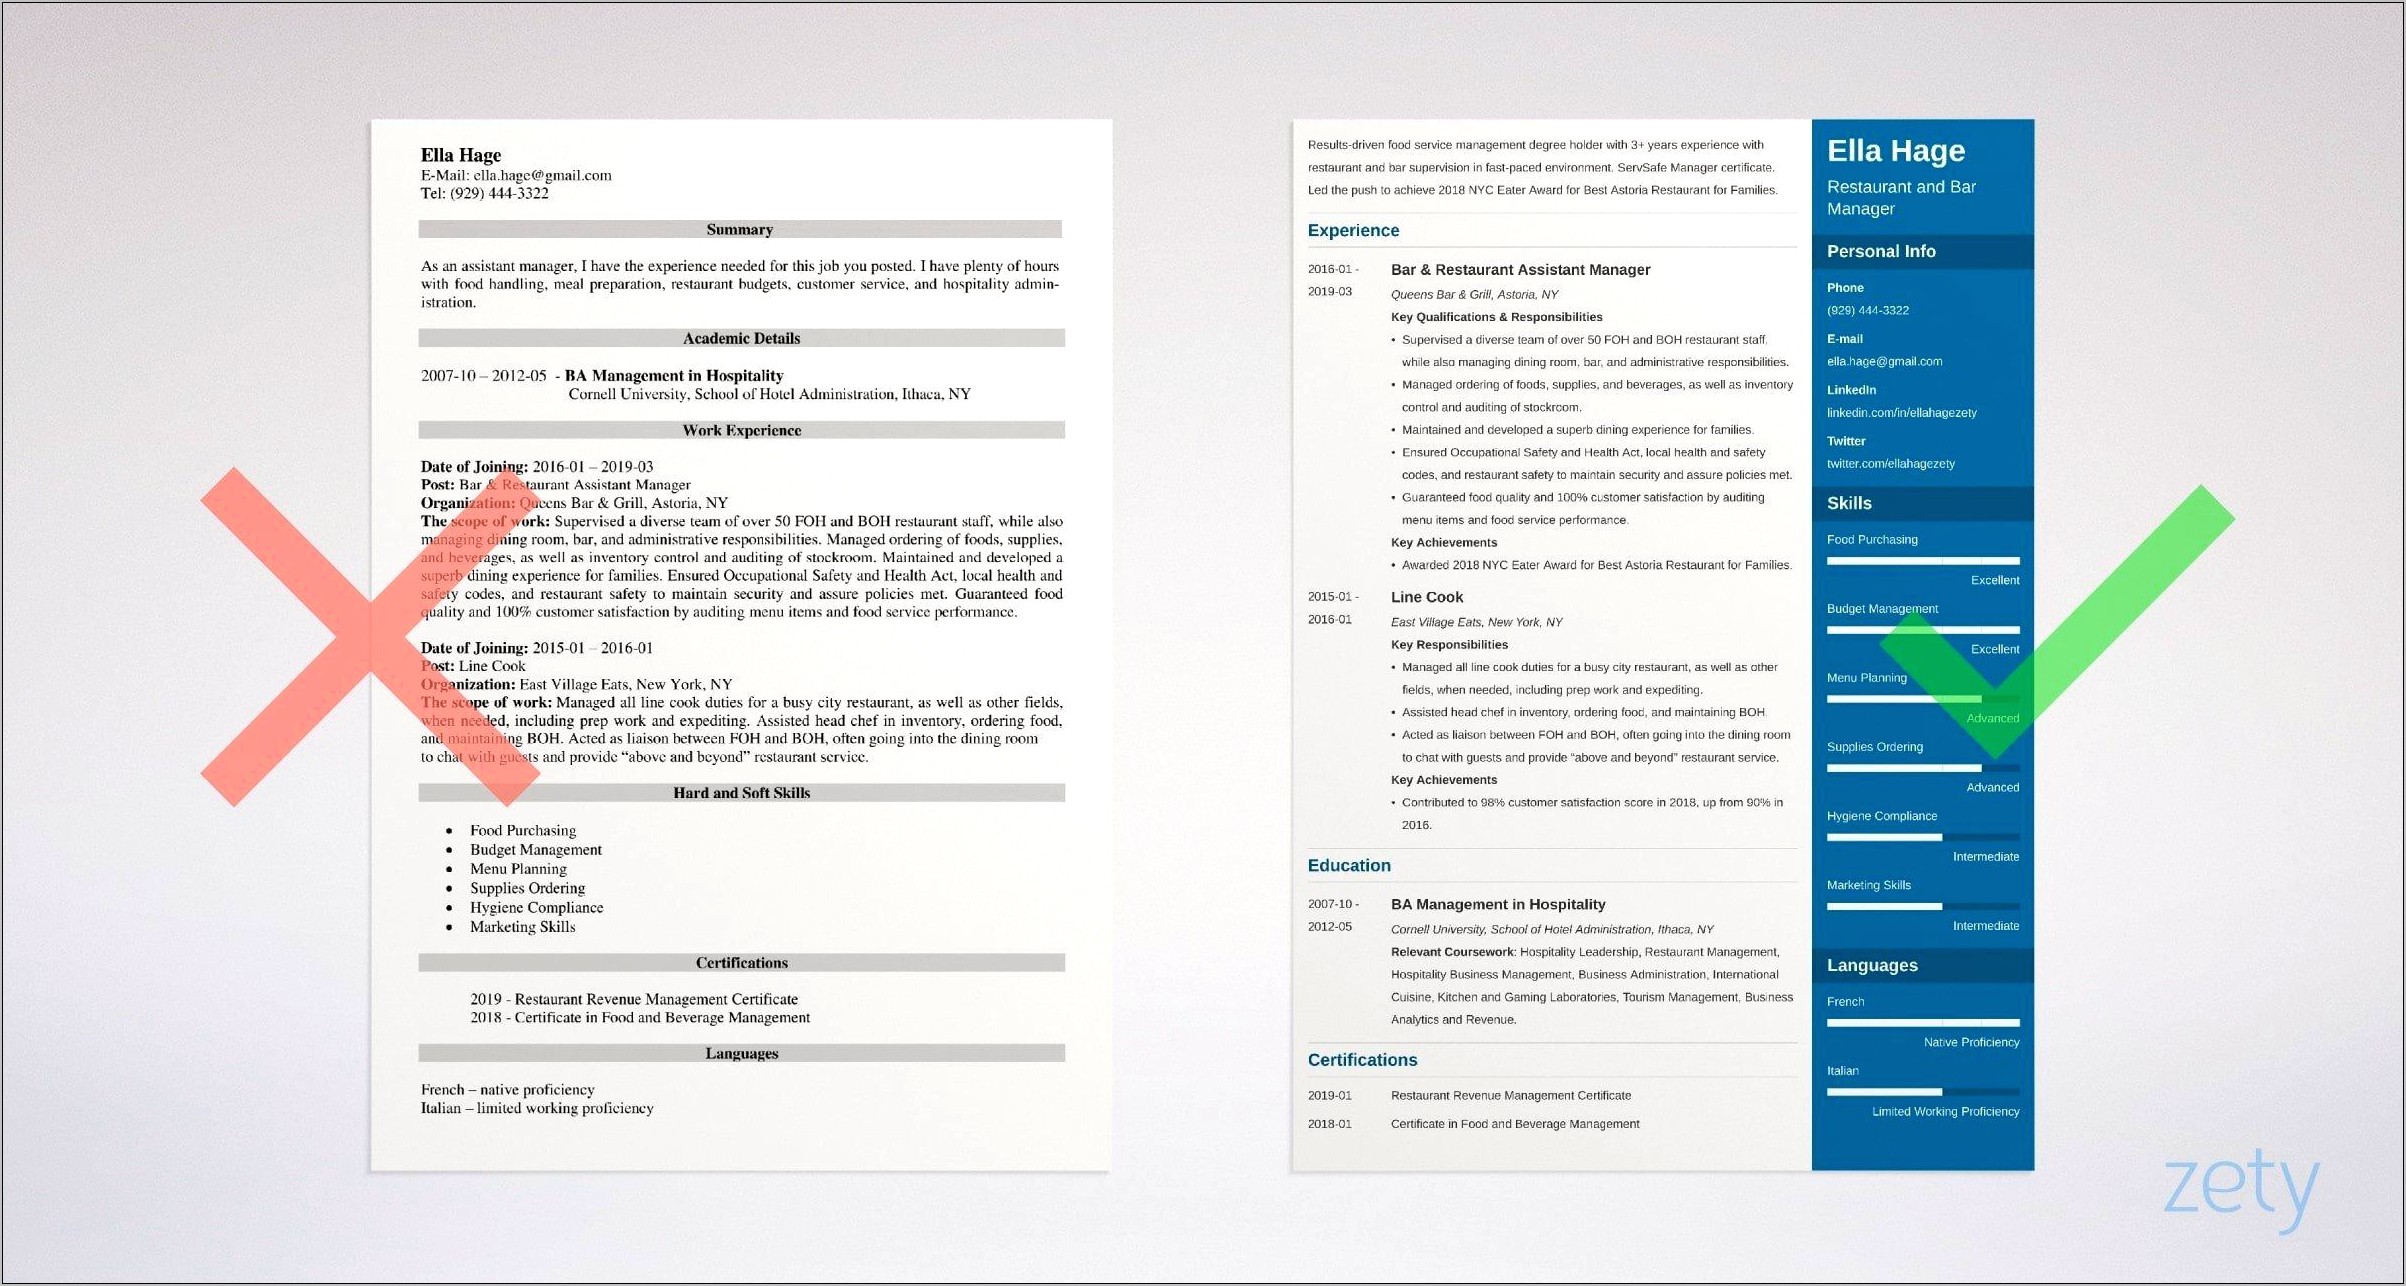 Sample Resume For Restaurant Manager Position